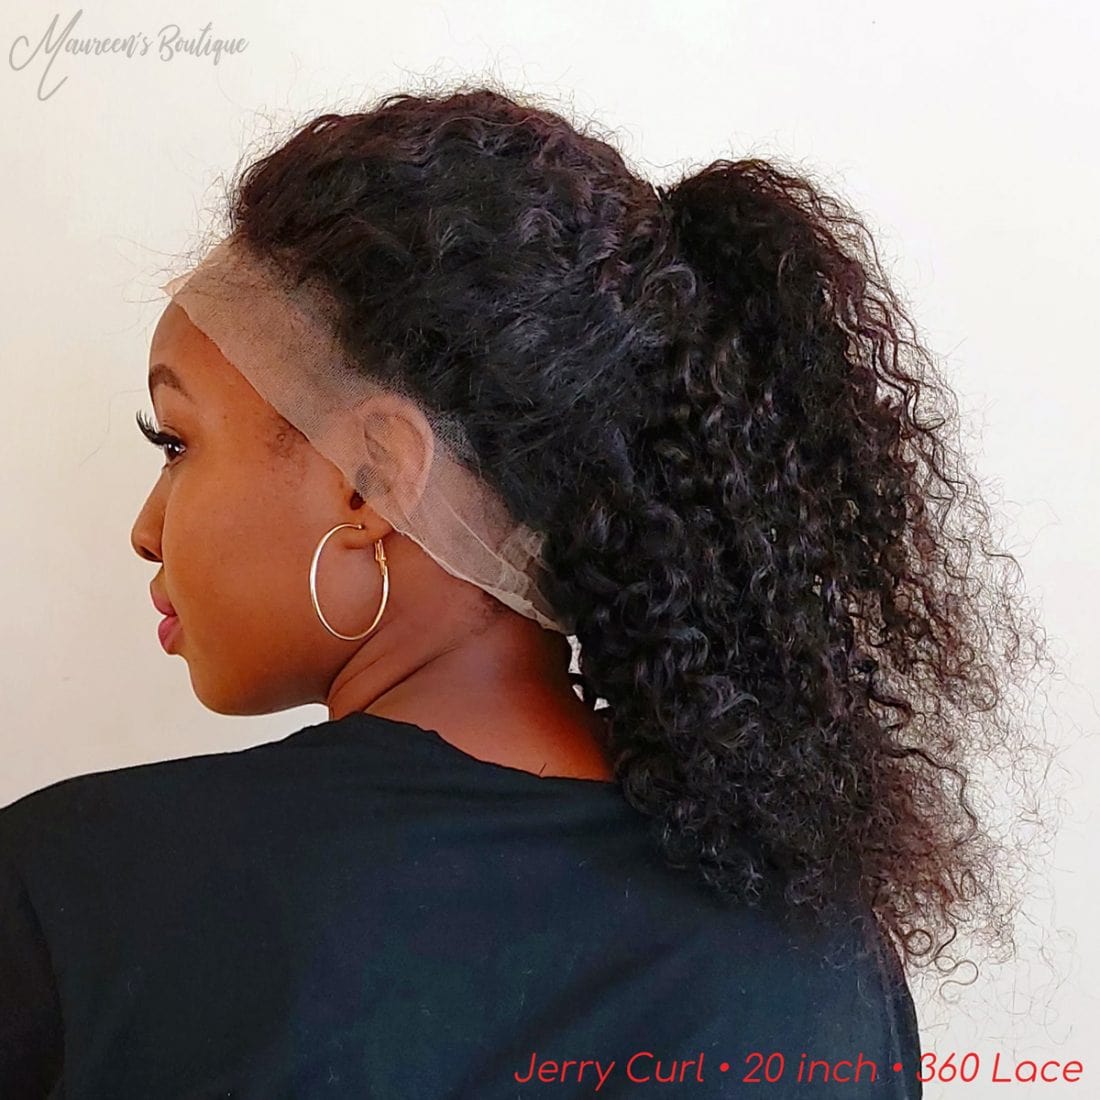 maureens.com Jerry Curl human hair wig 20 inch 360 6